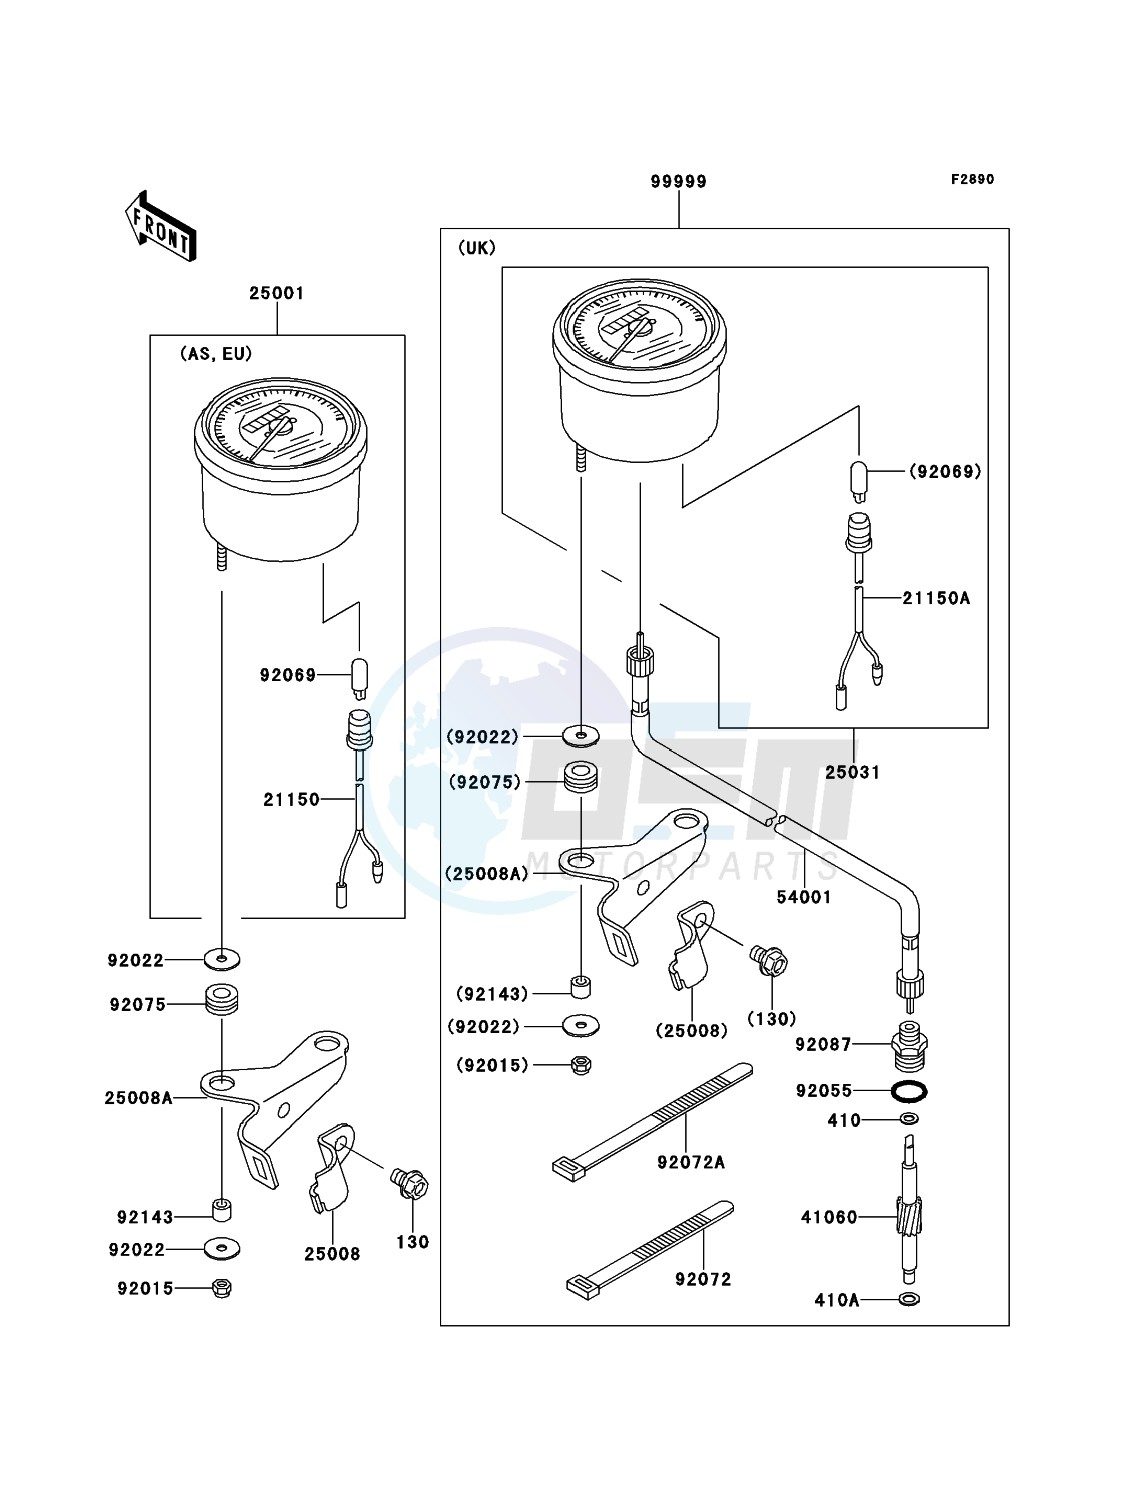 Optional Parts(Meter) blueprint